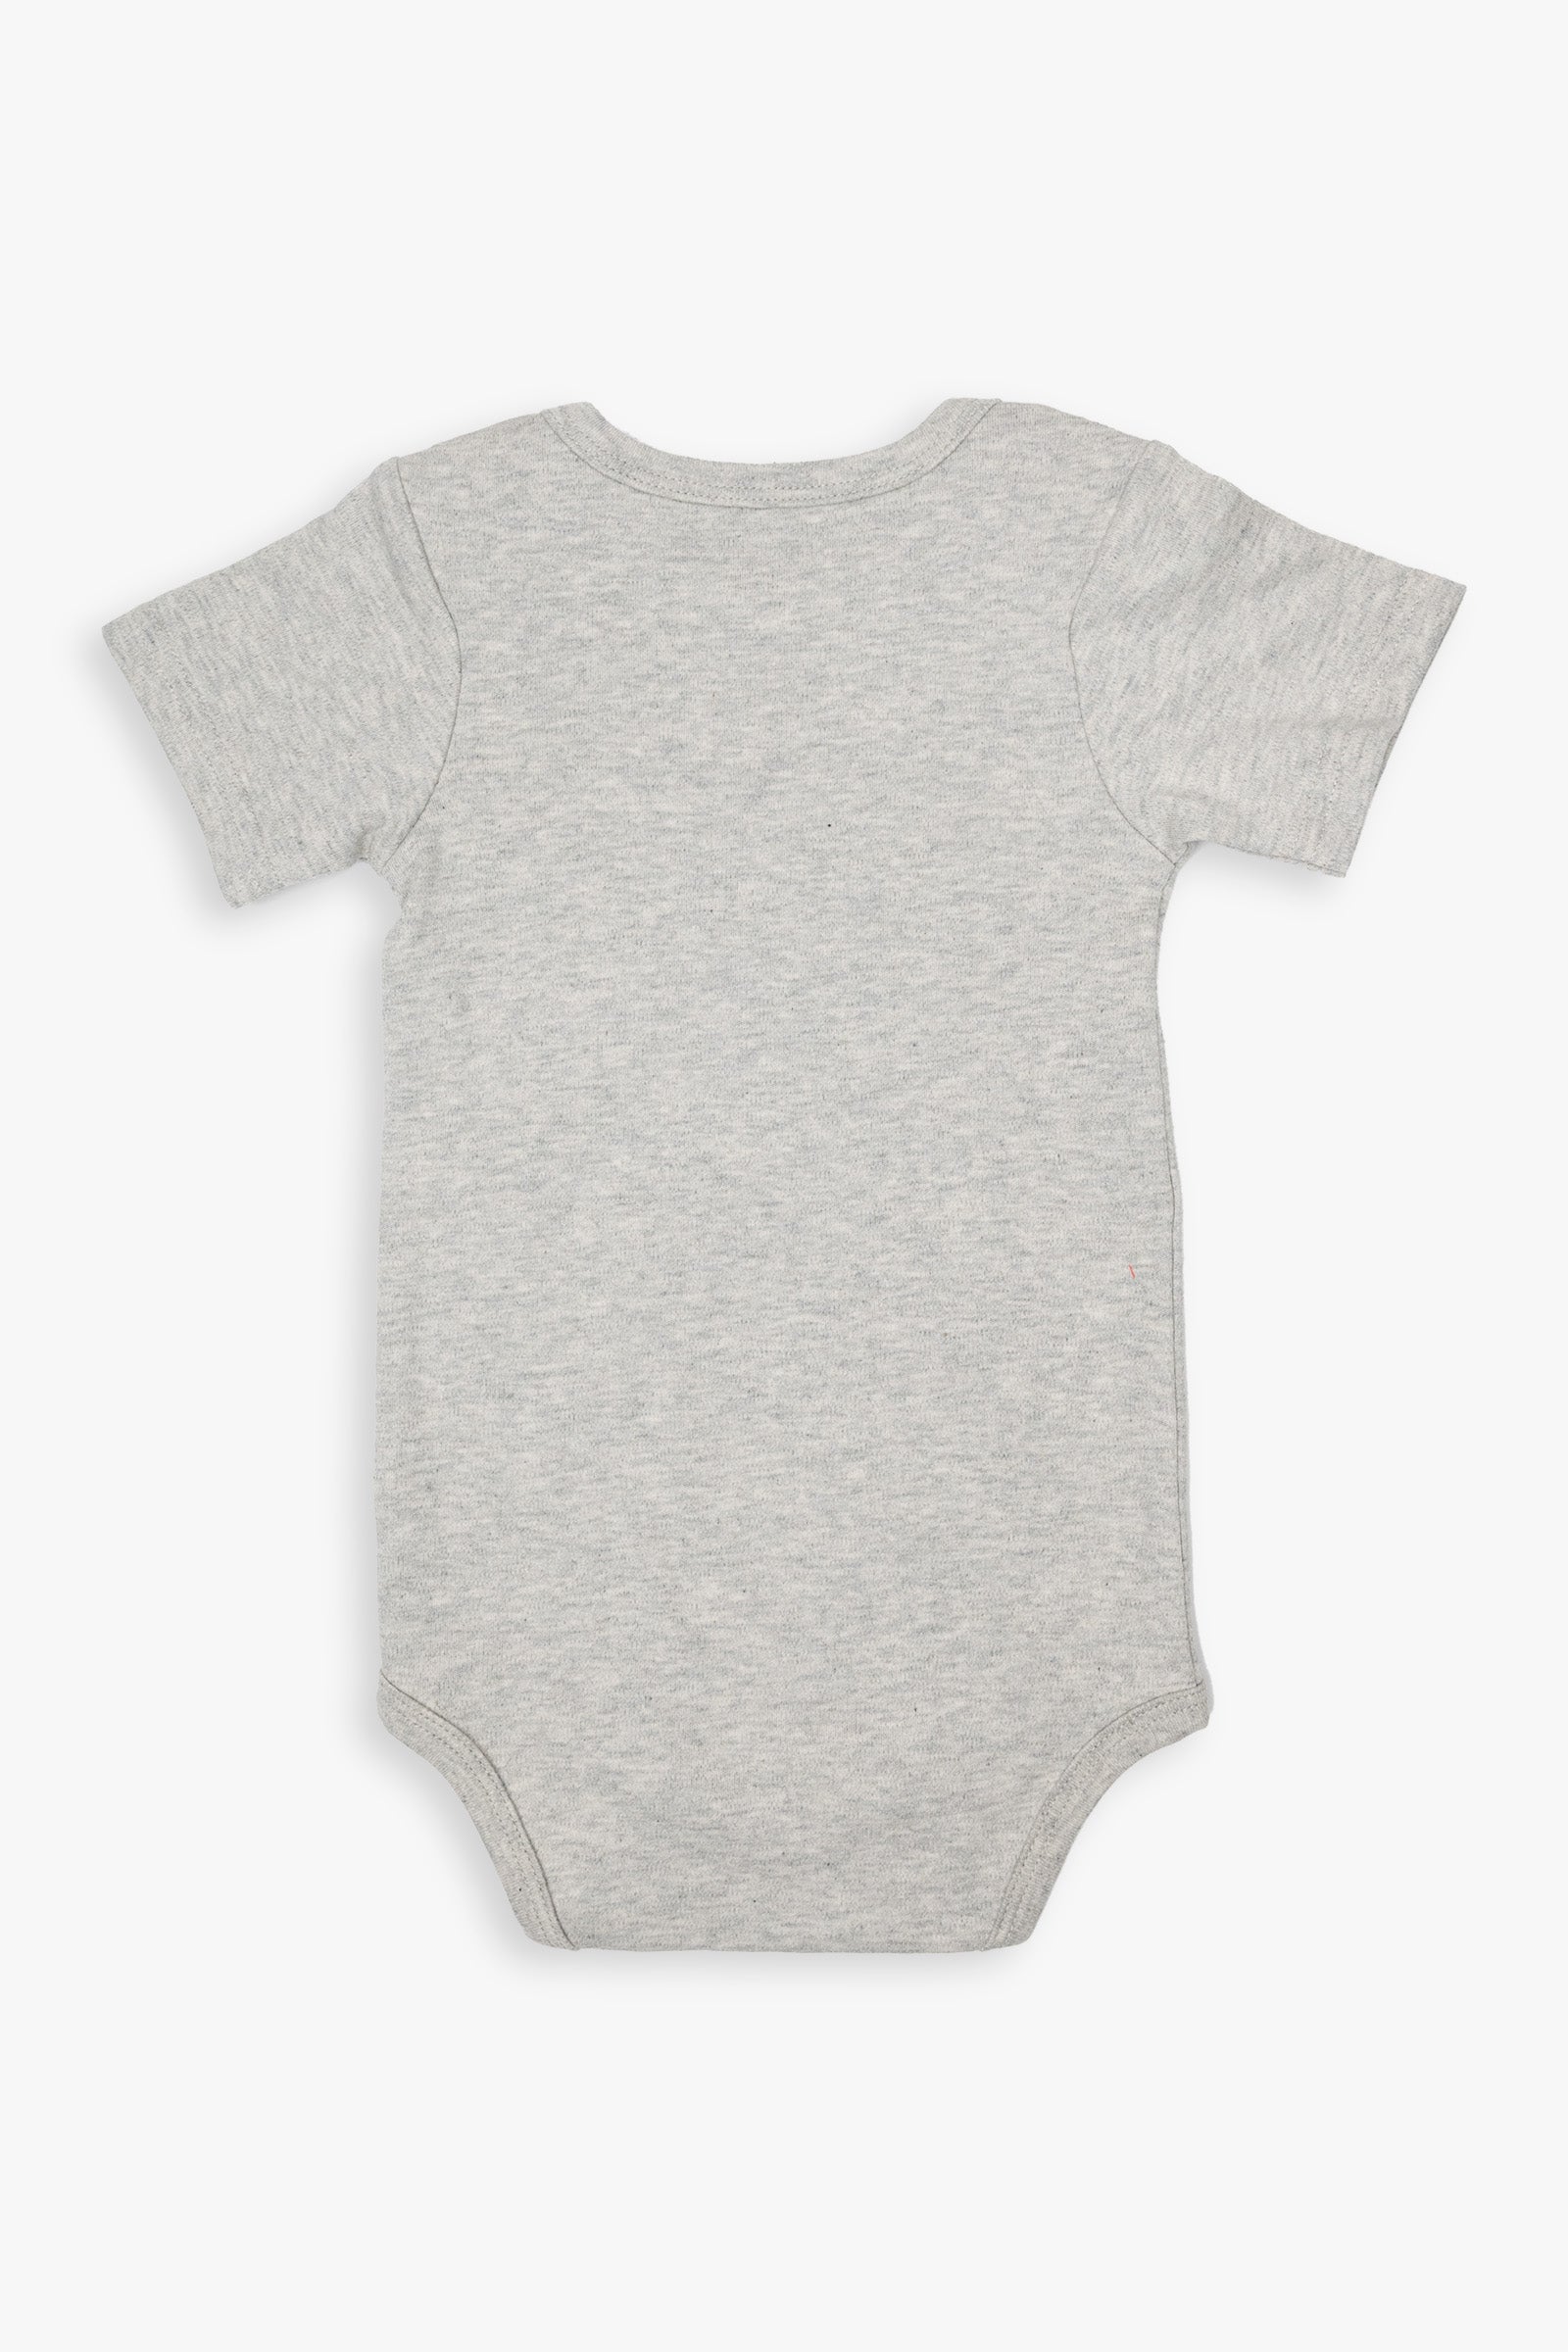 Unisex Baby Short Sleeve Bodysuit With Snaps Multipack